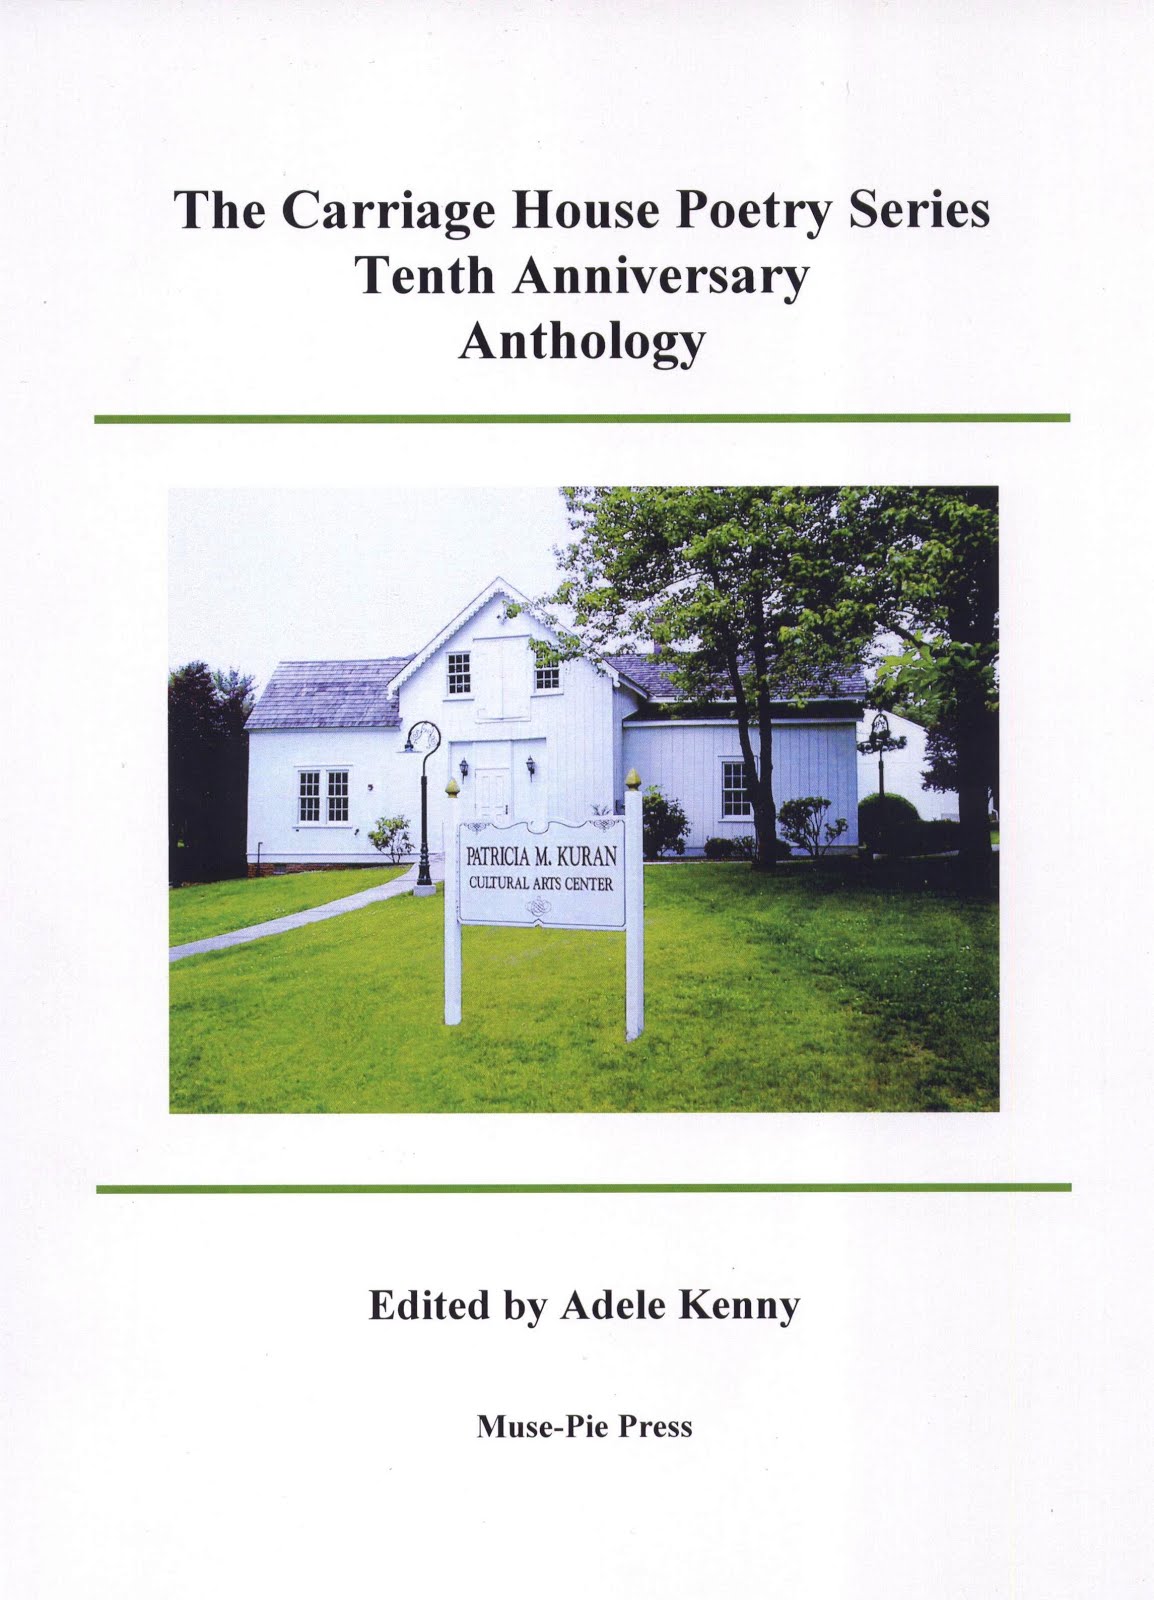 Tenth Anniversary Anthology